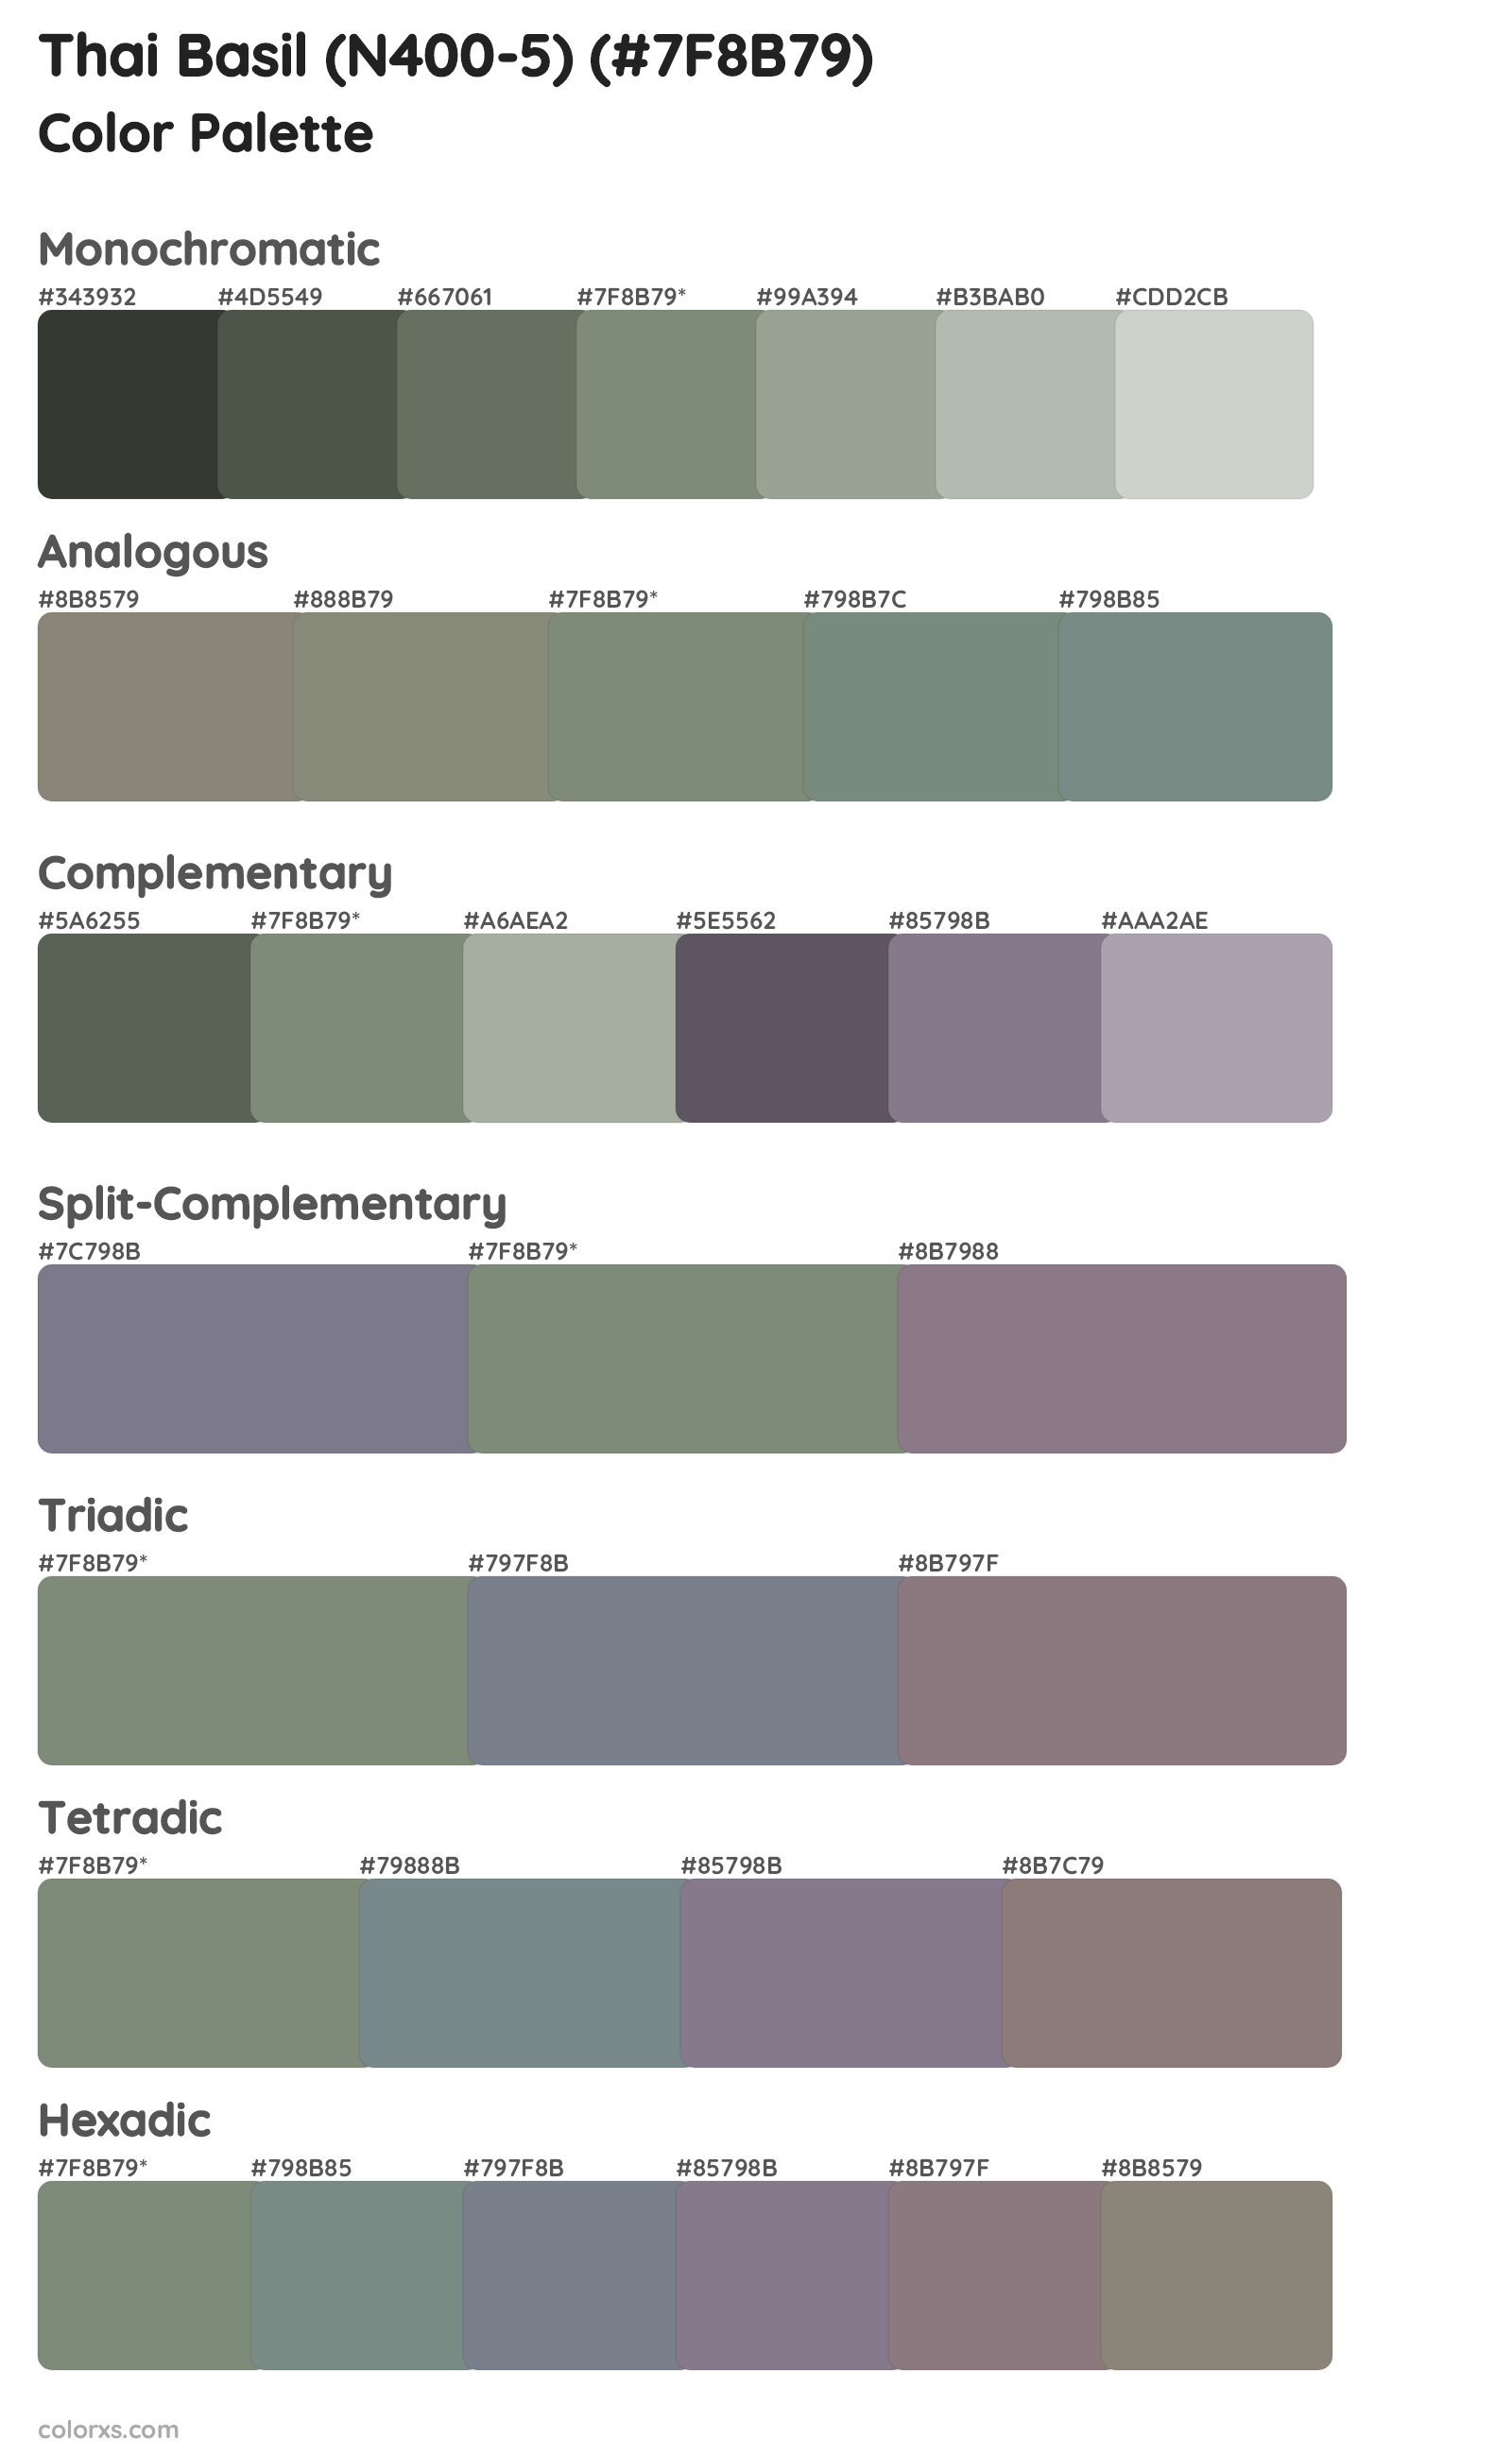 Thai Basil (N400-5) Color Scheme Palettes